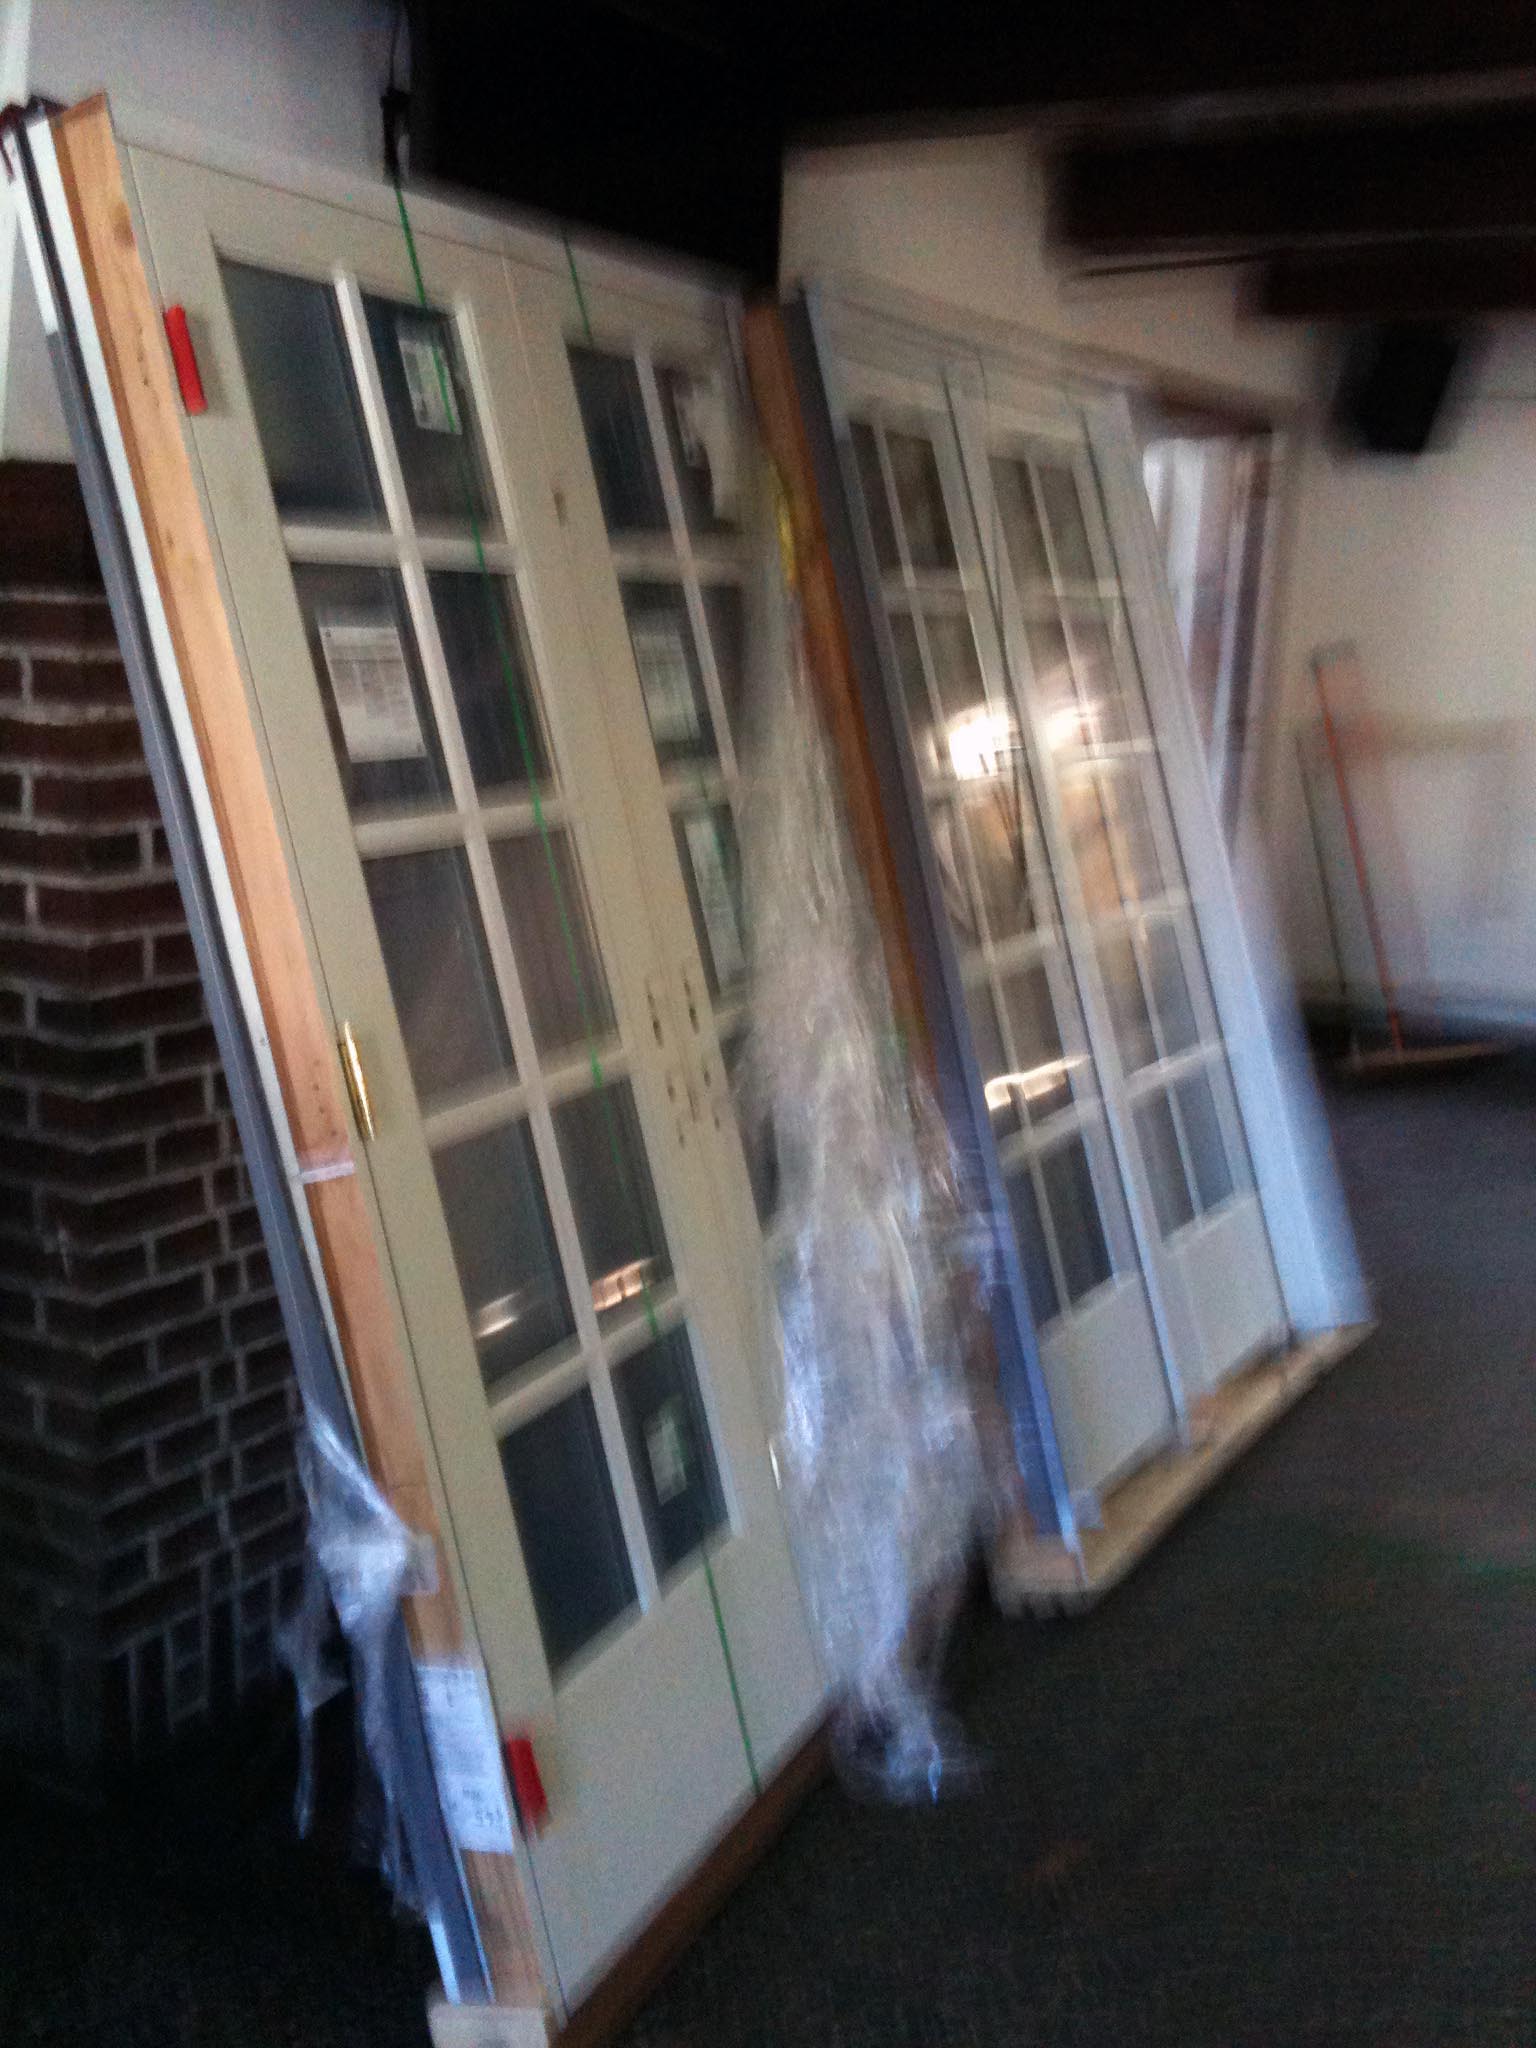  Side-Porch Repair Project - Nov. 22, 2013
New Doors to bar 